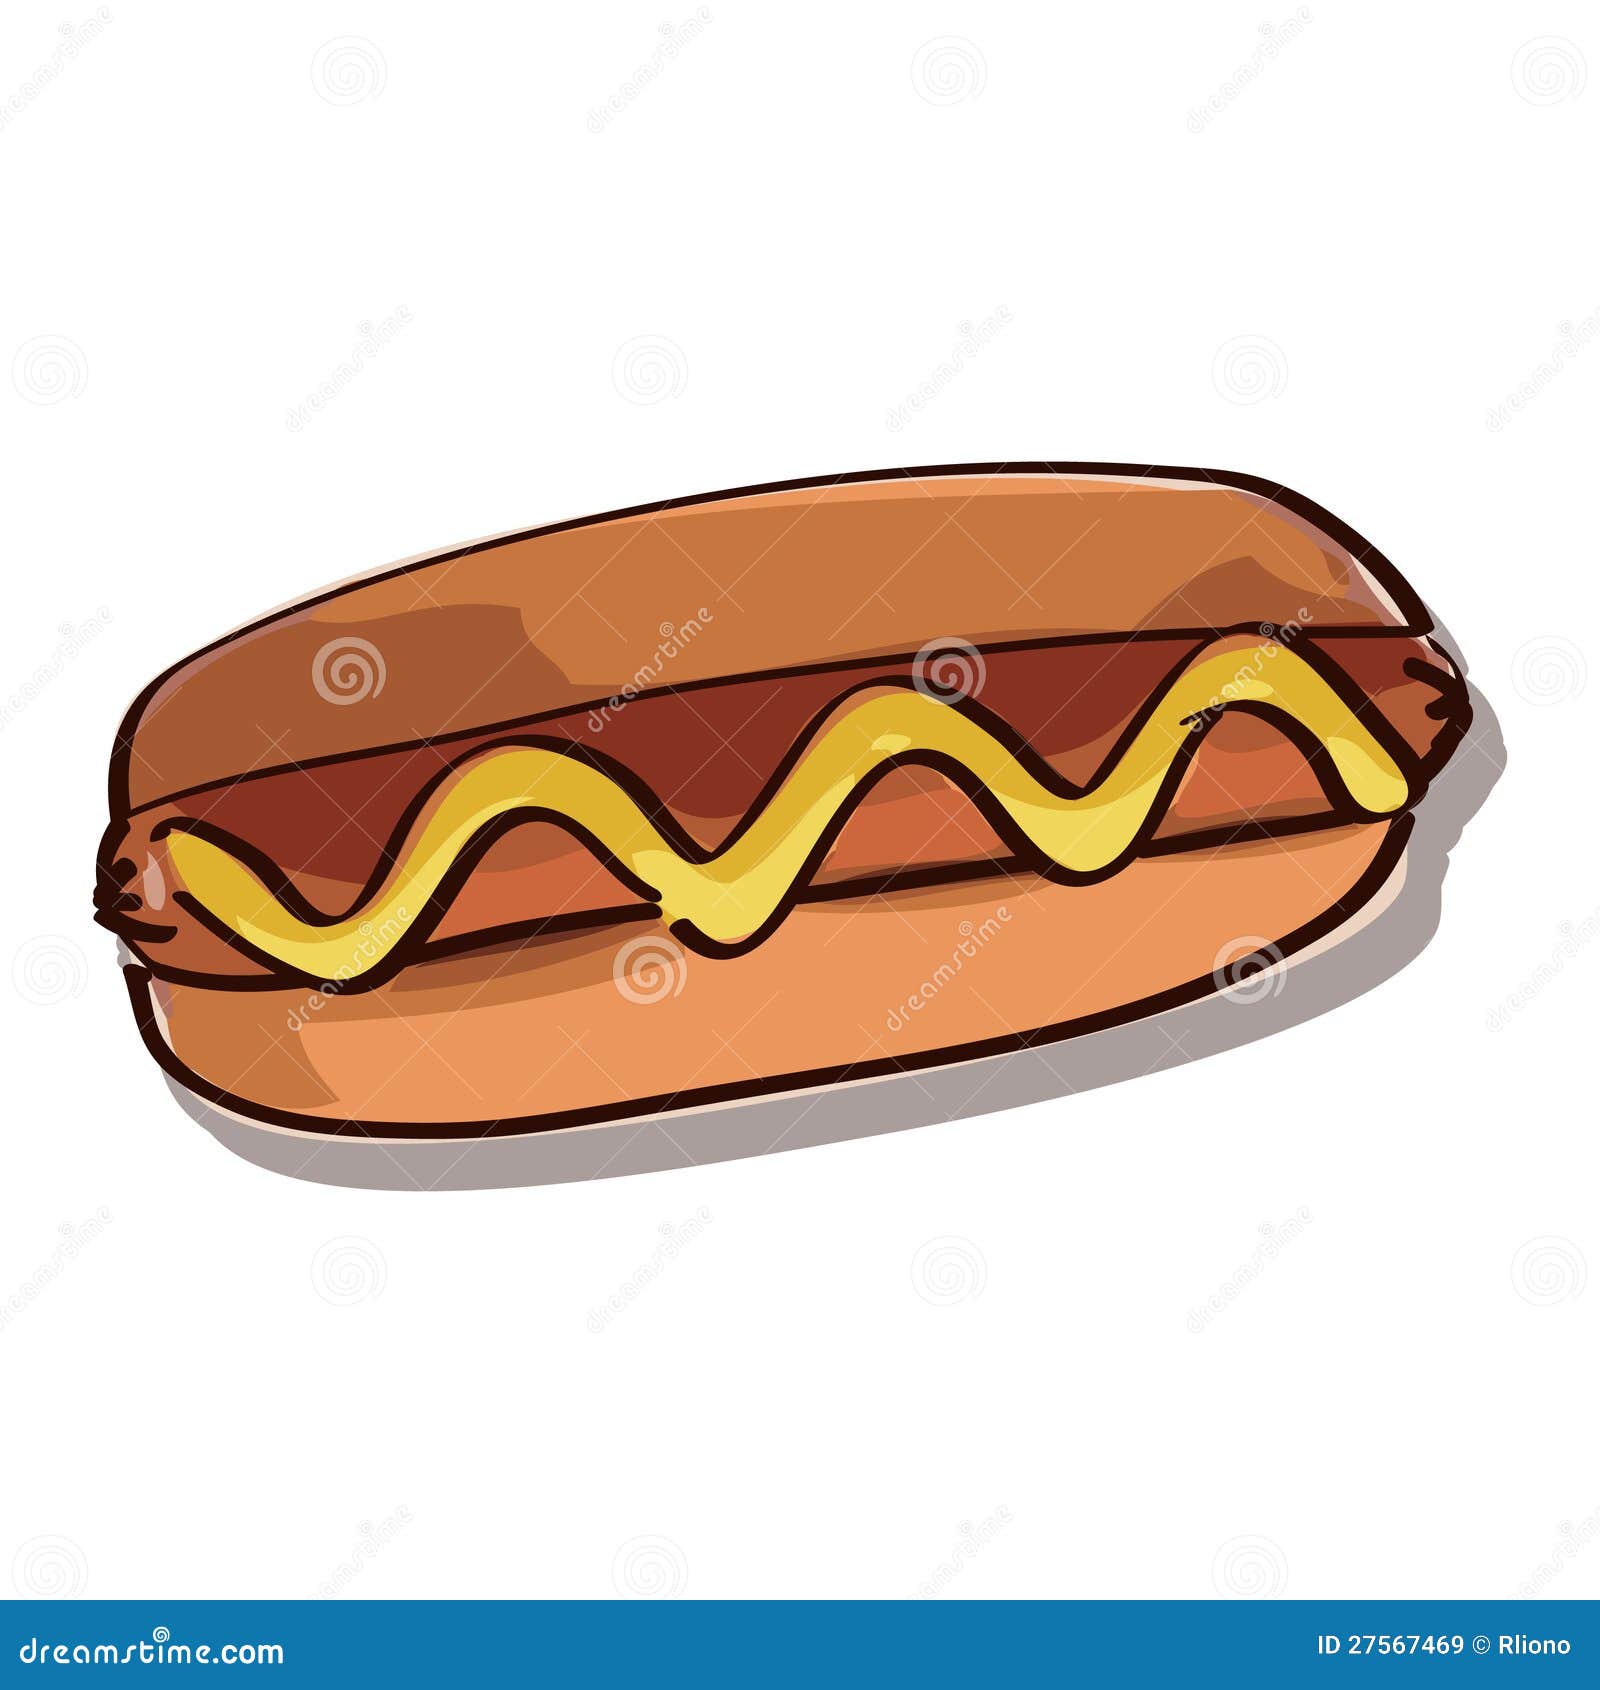 Hot Dog Illustration. Vector Stock Illustration - Illustration of fresh